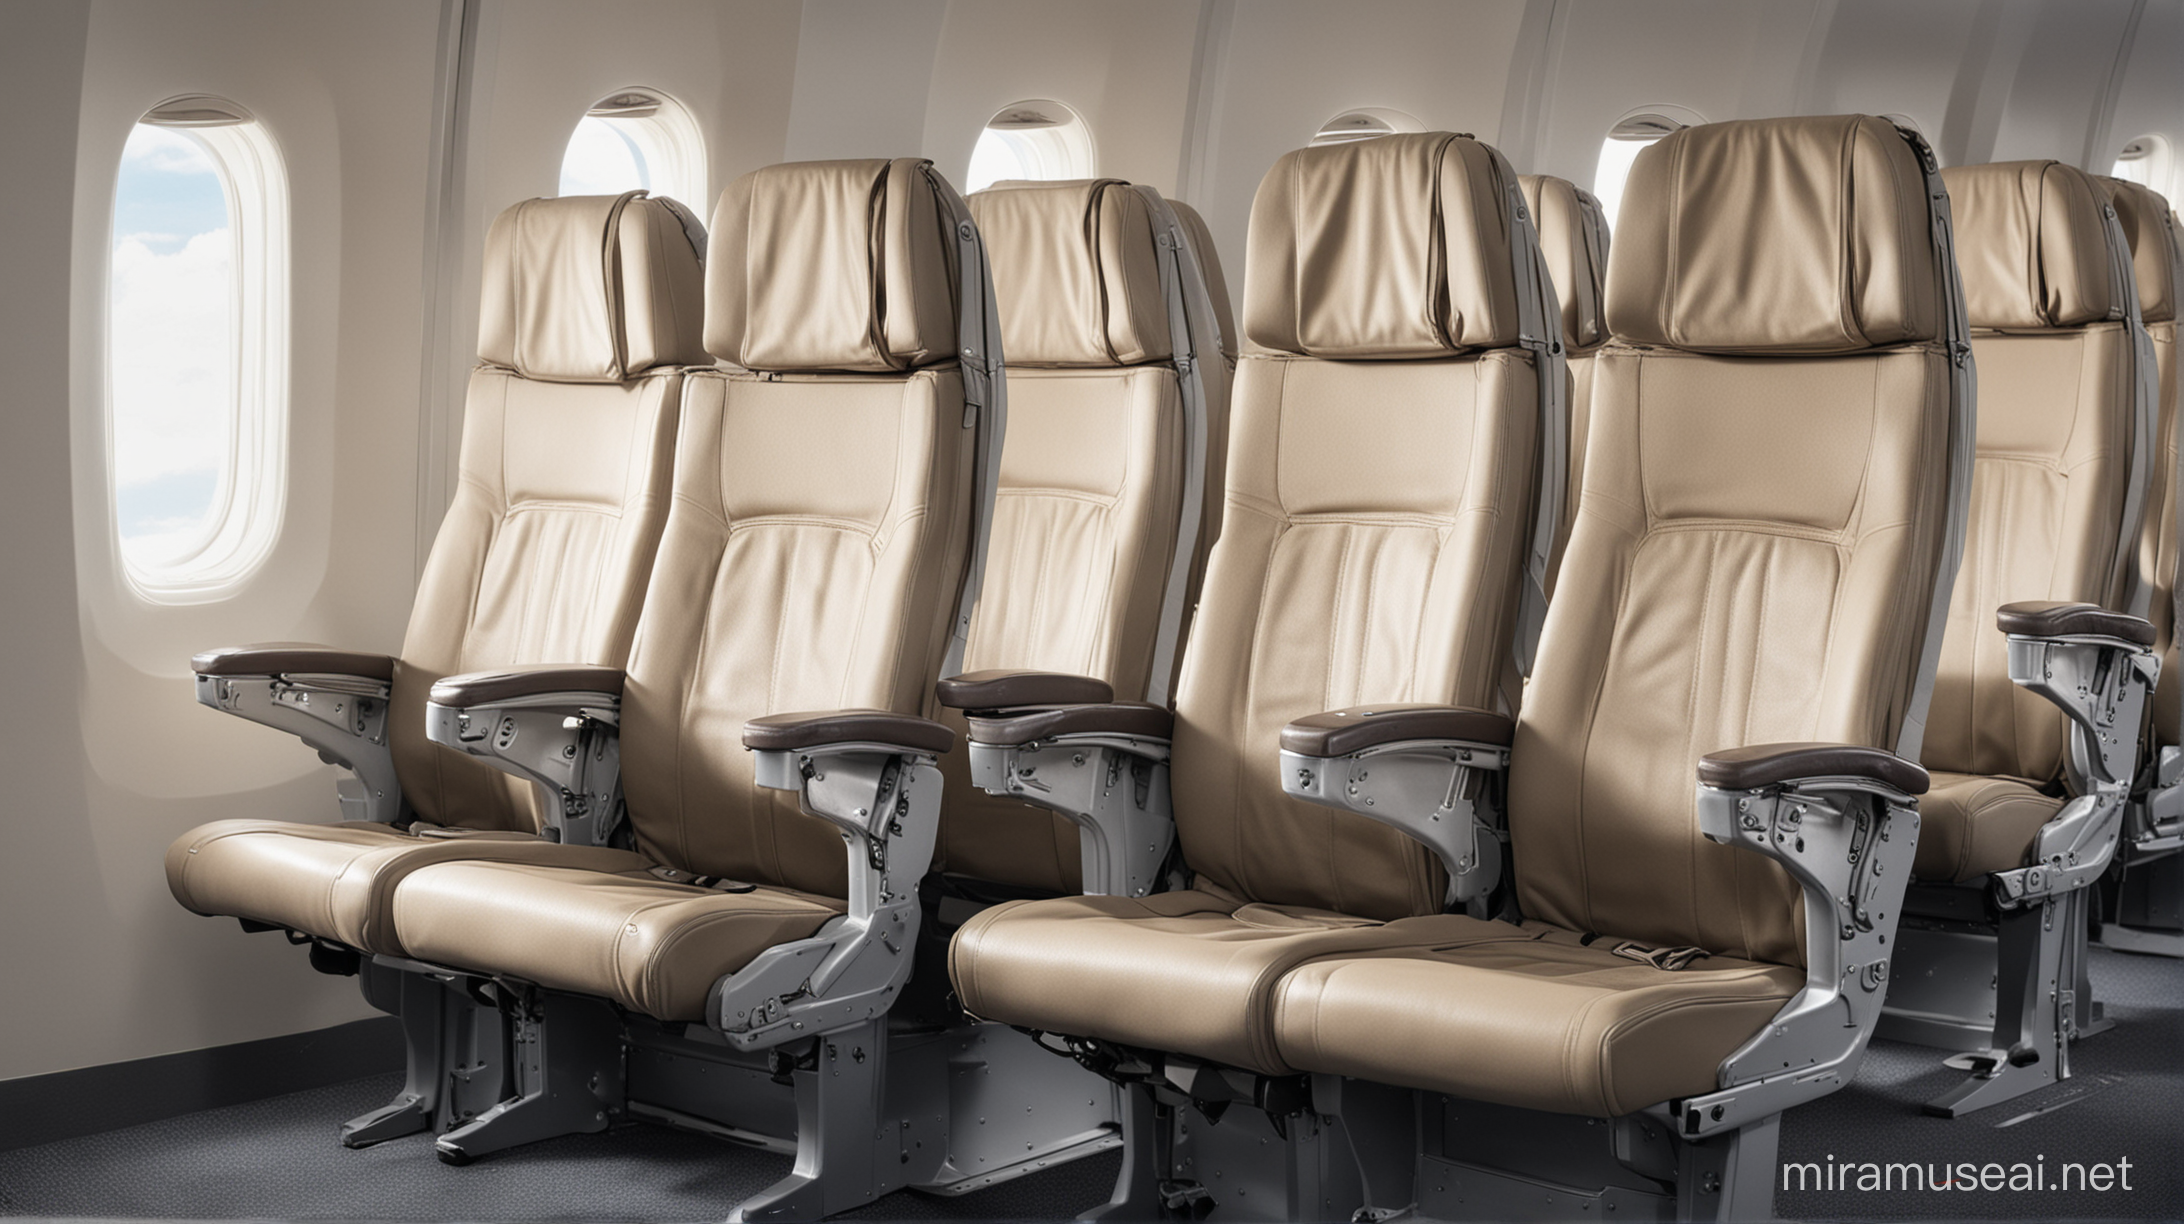 Three Aircraft Seats Arranged in a Row